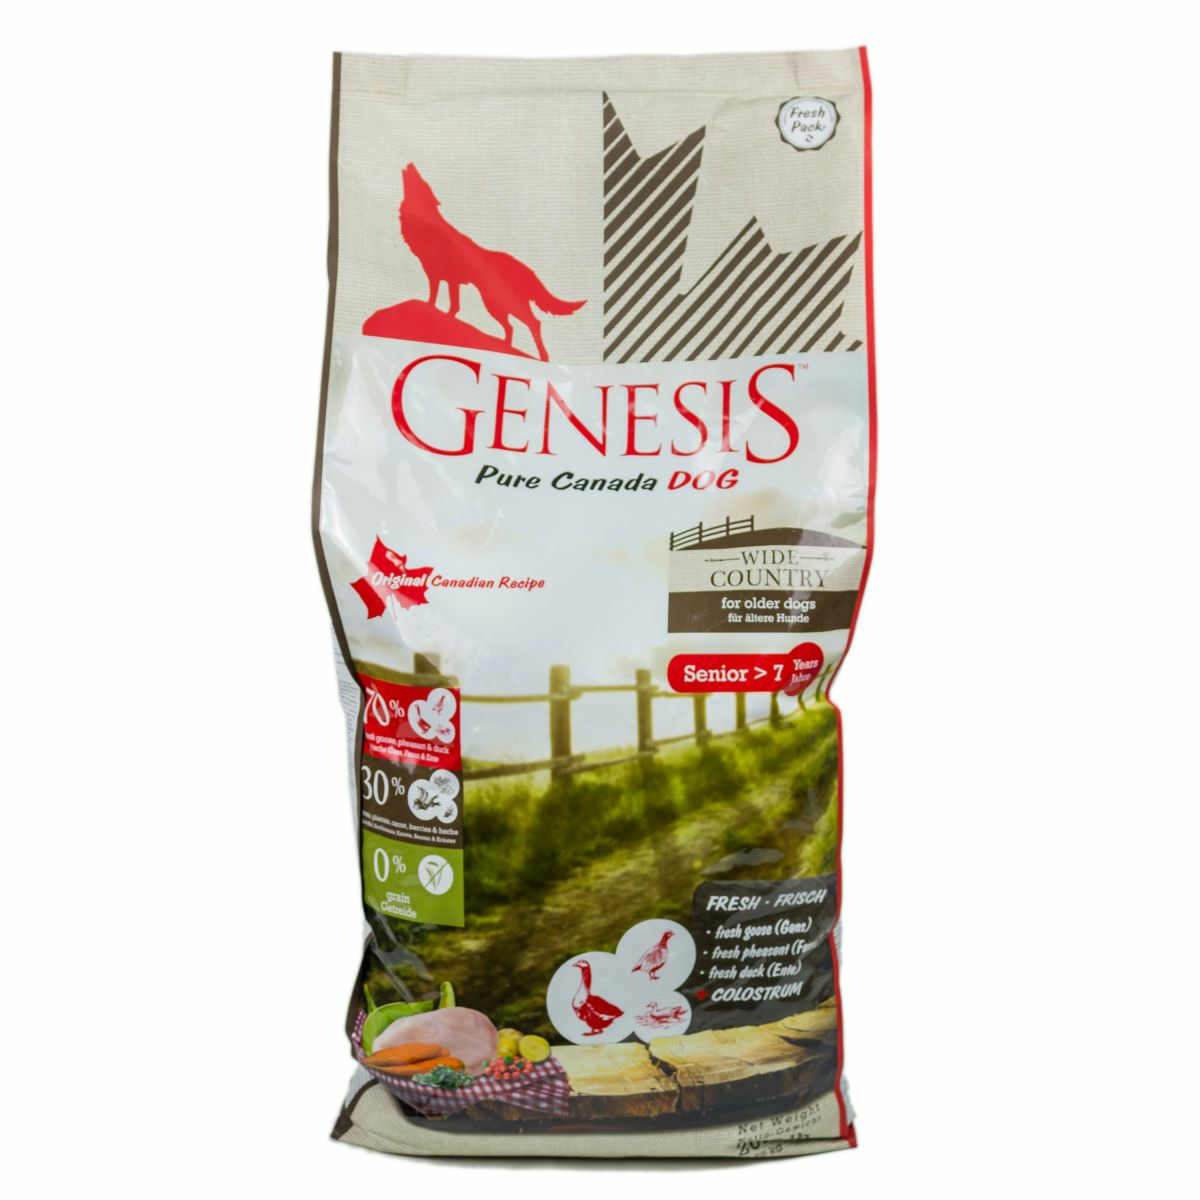 Vast country. Genesis корм. Genesis корм для собак. Genesis Pure Canada. Genesis корм для кошек.